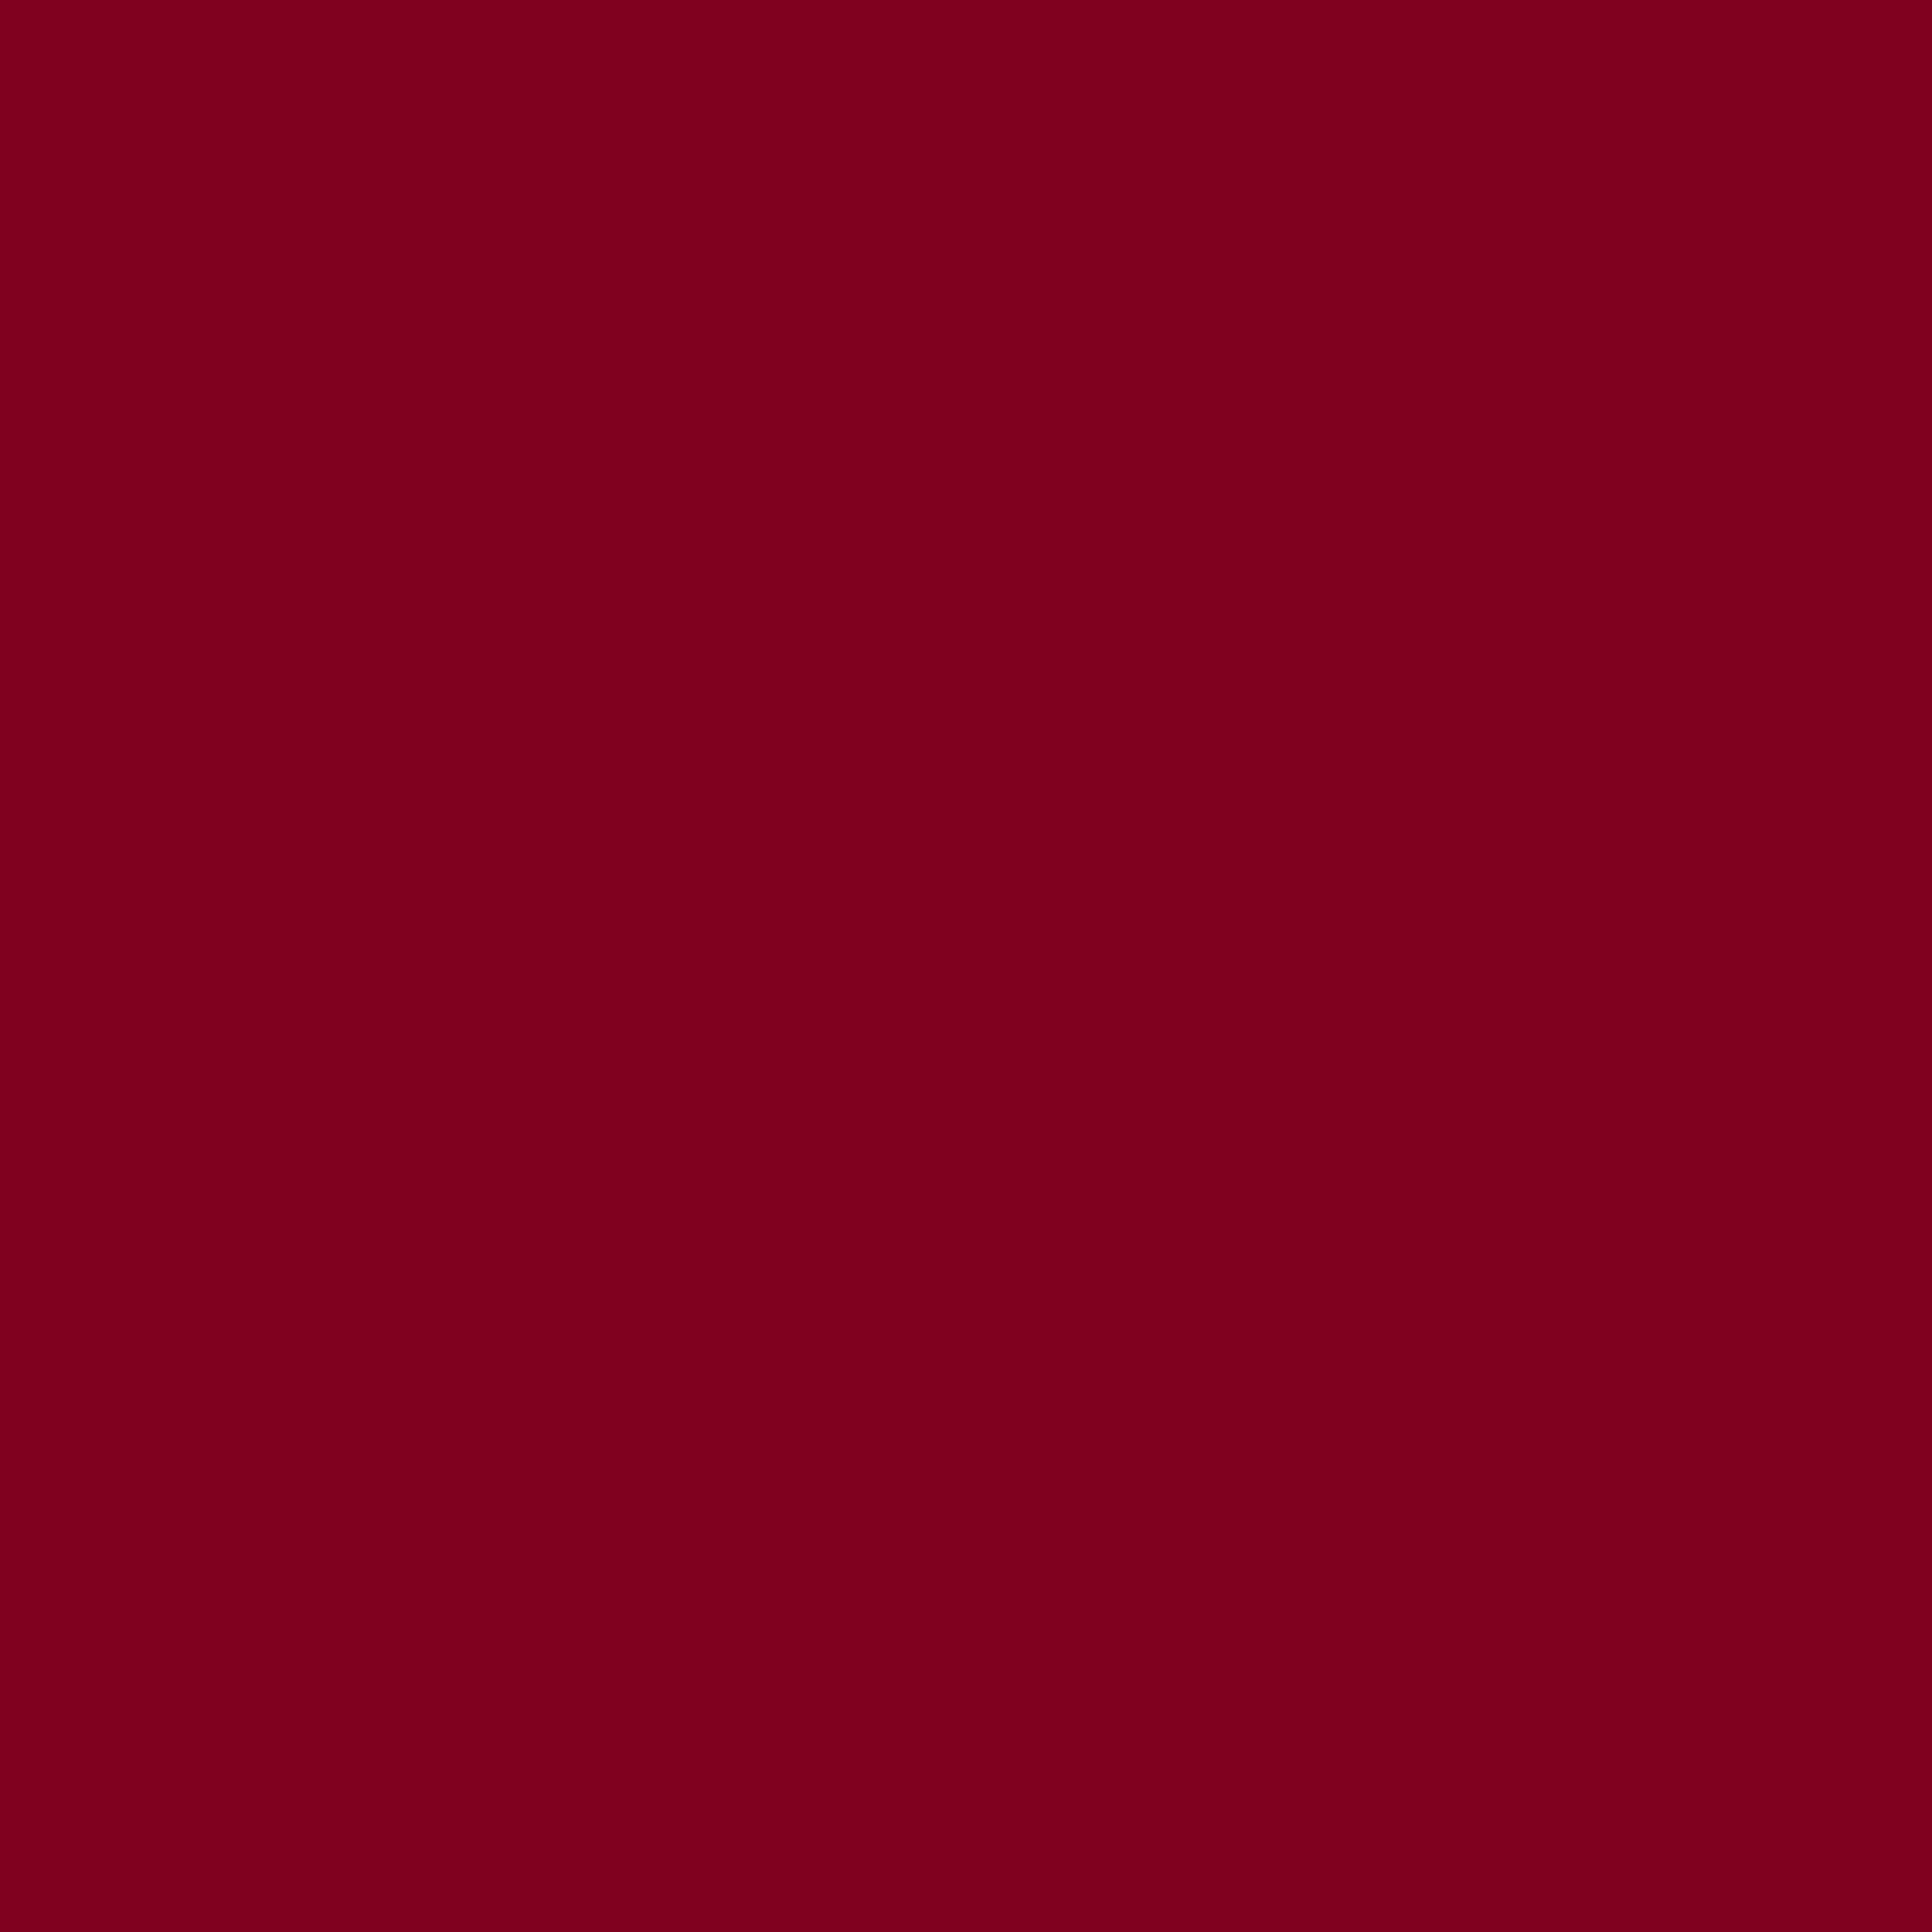 2732x2732 Burgundy Solid Color Background